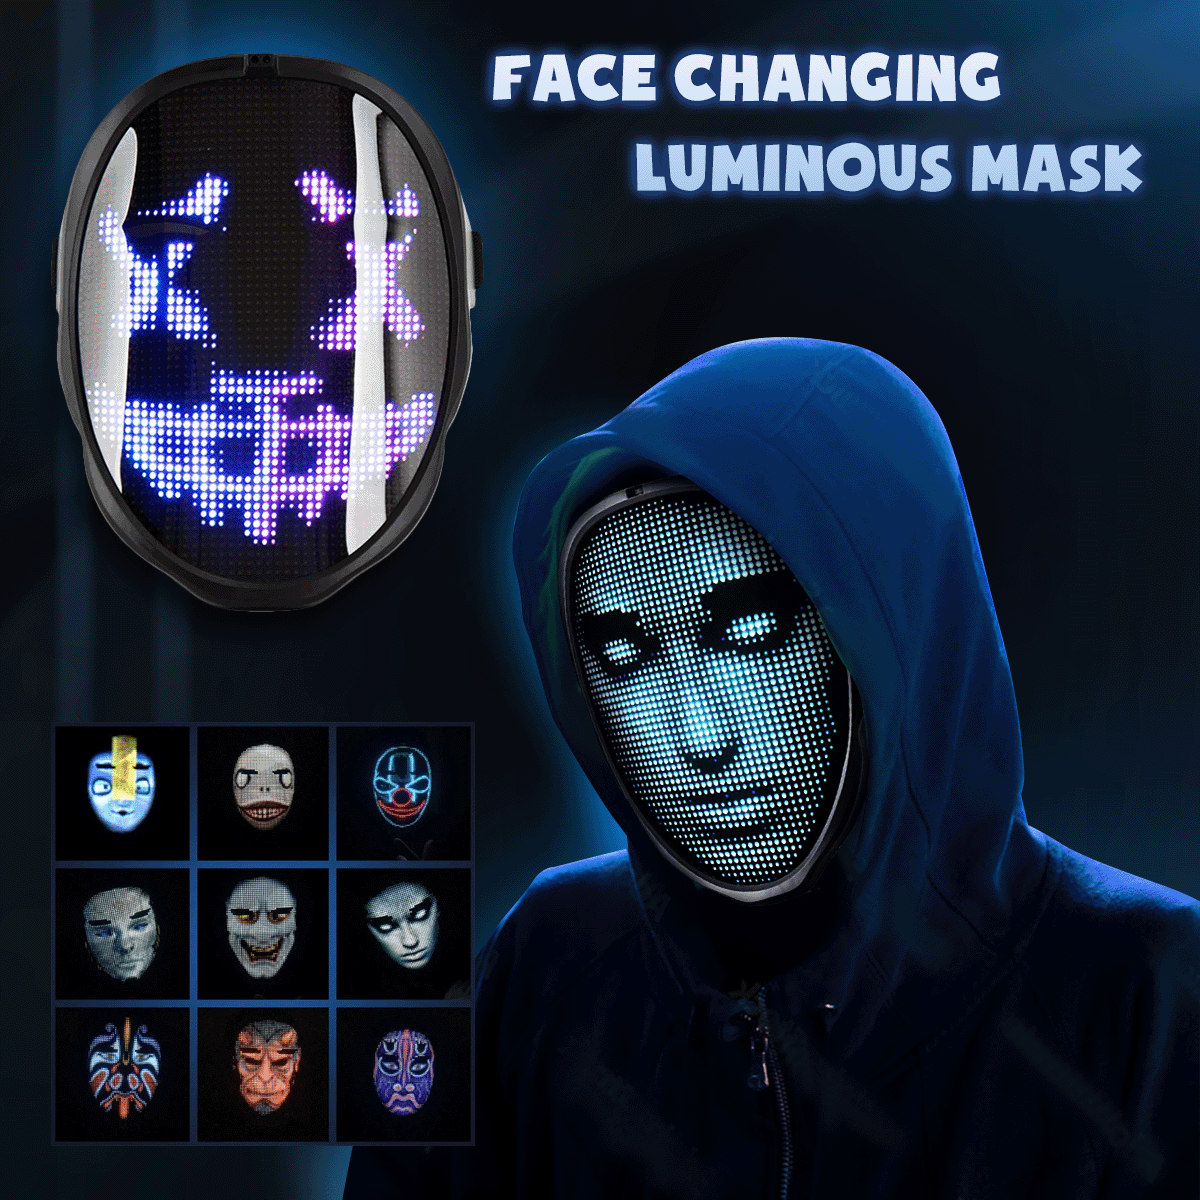 The Original Luminous Mask